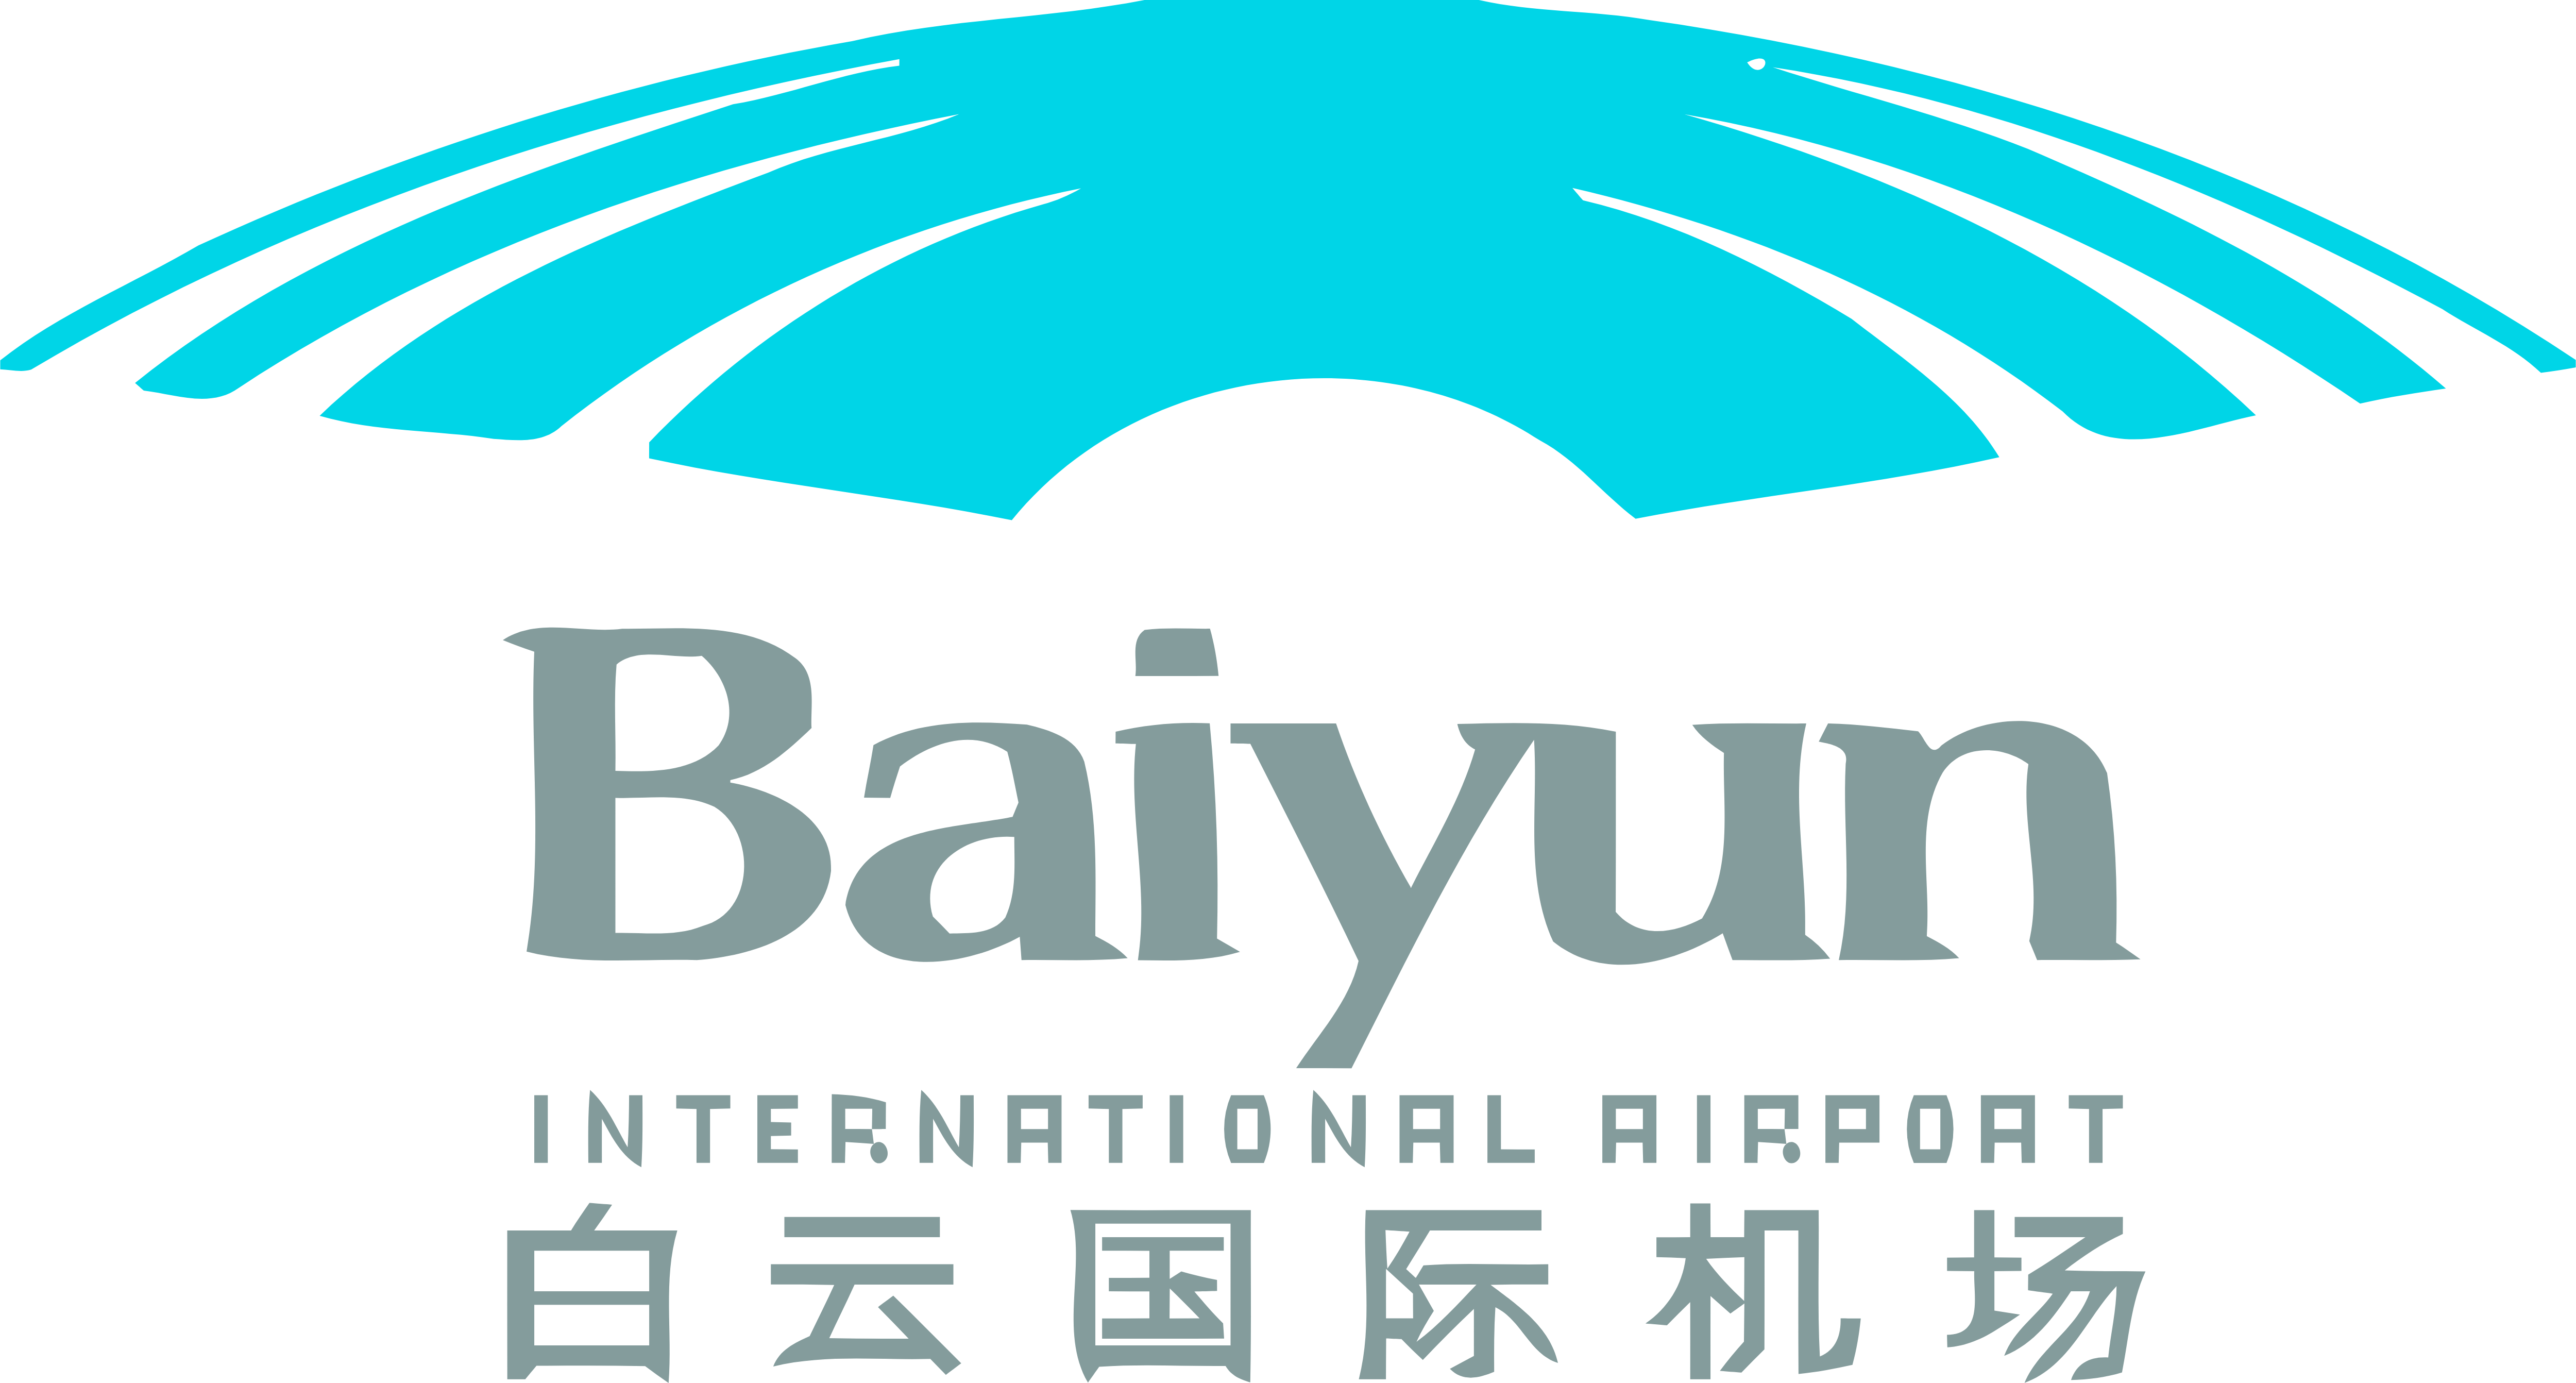 Airport Company Logos